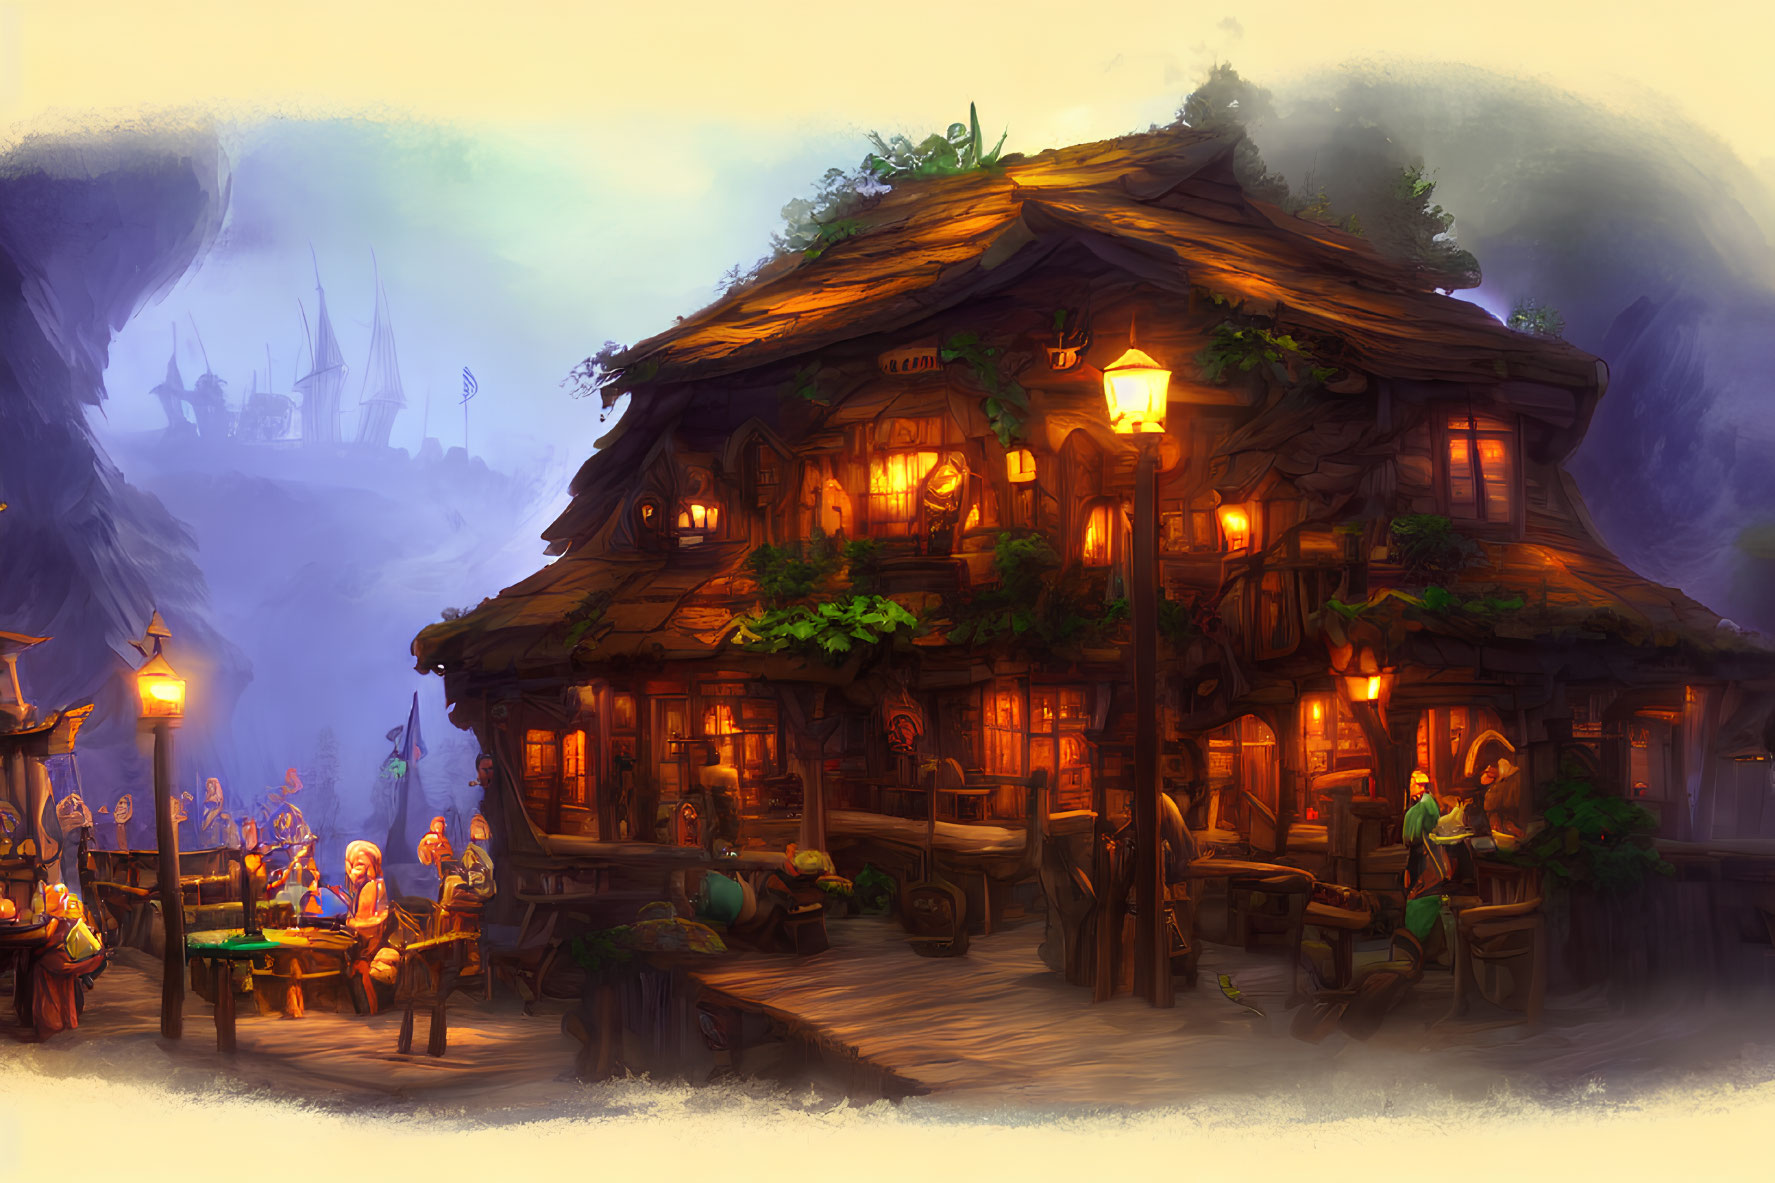 Fantasy tavern scene with patrons in misty landscape at dusk